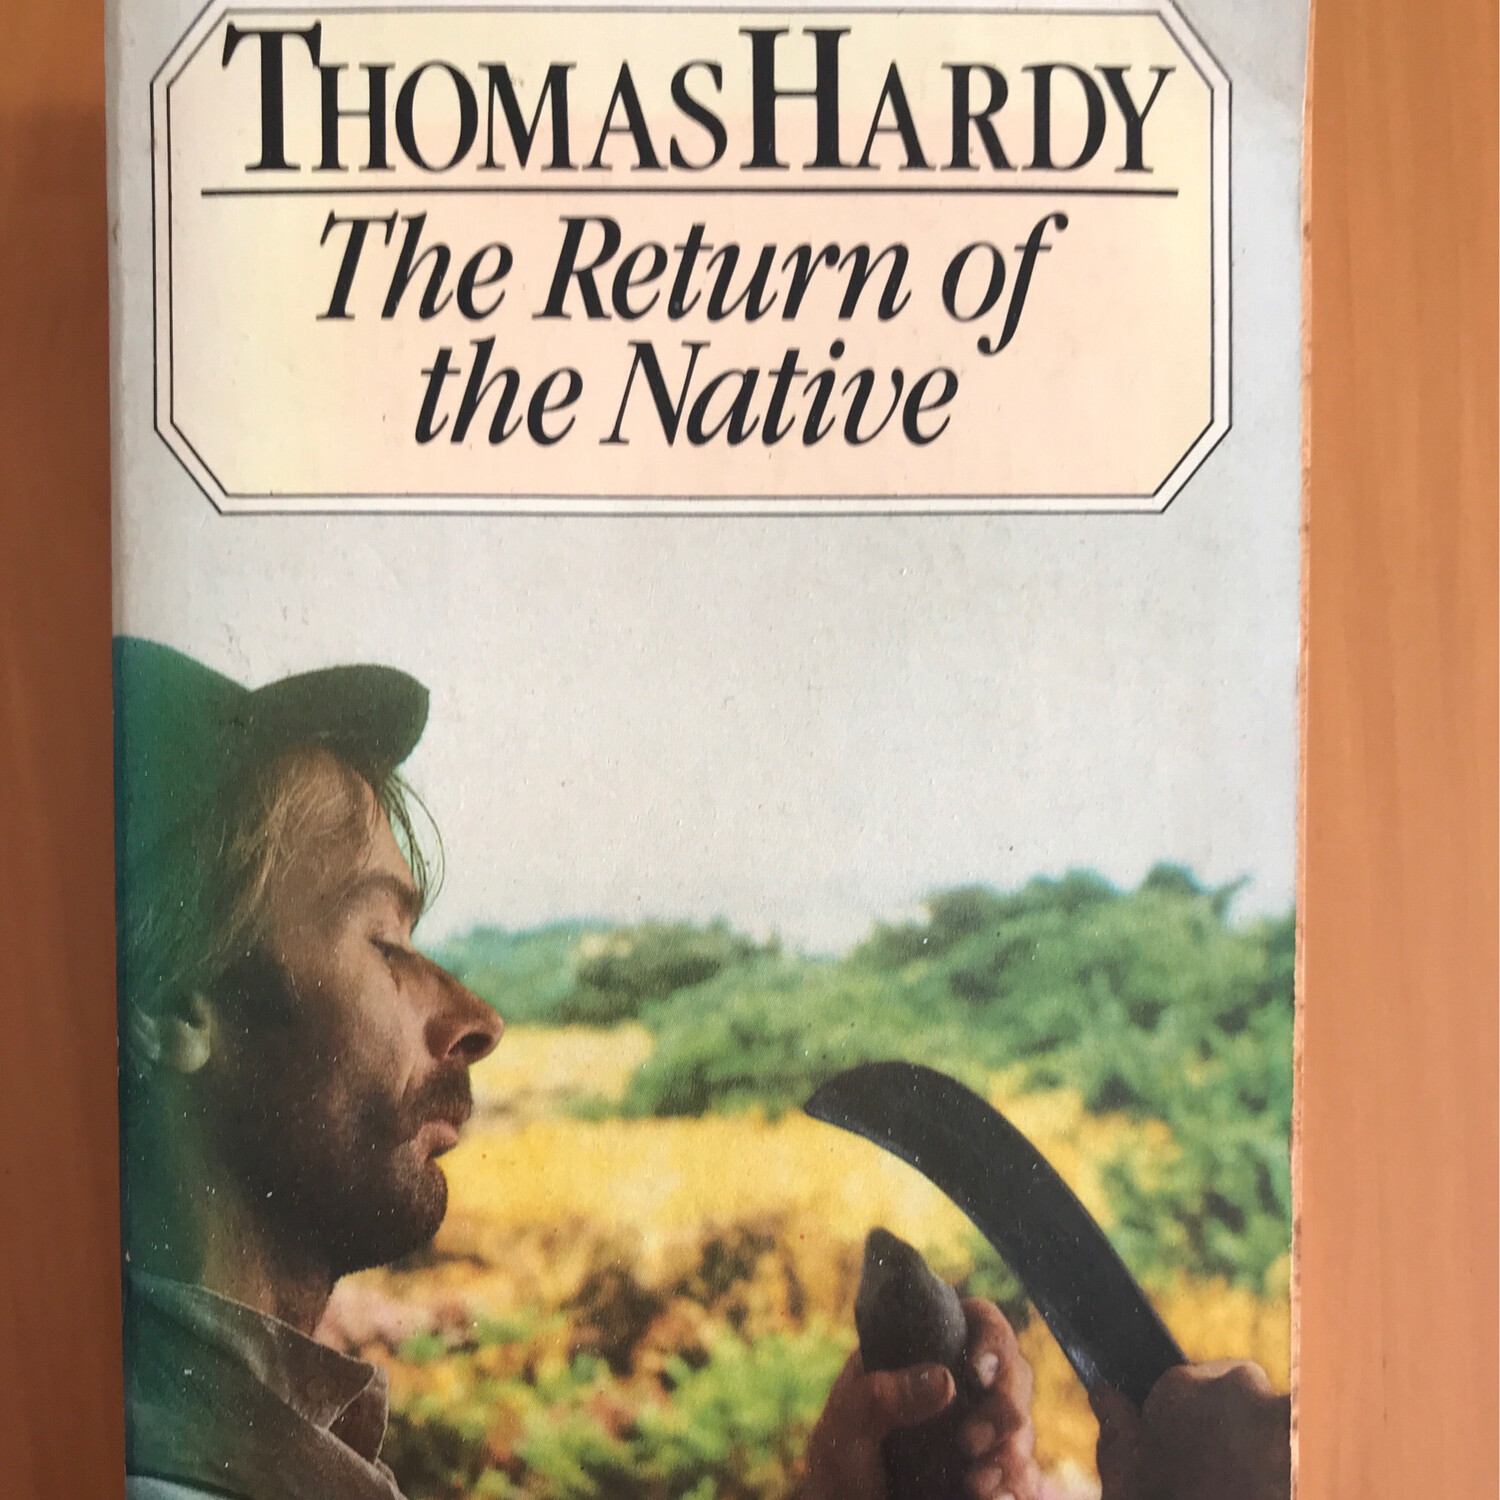 The Return Of The Native, Thomas Hardy